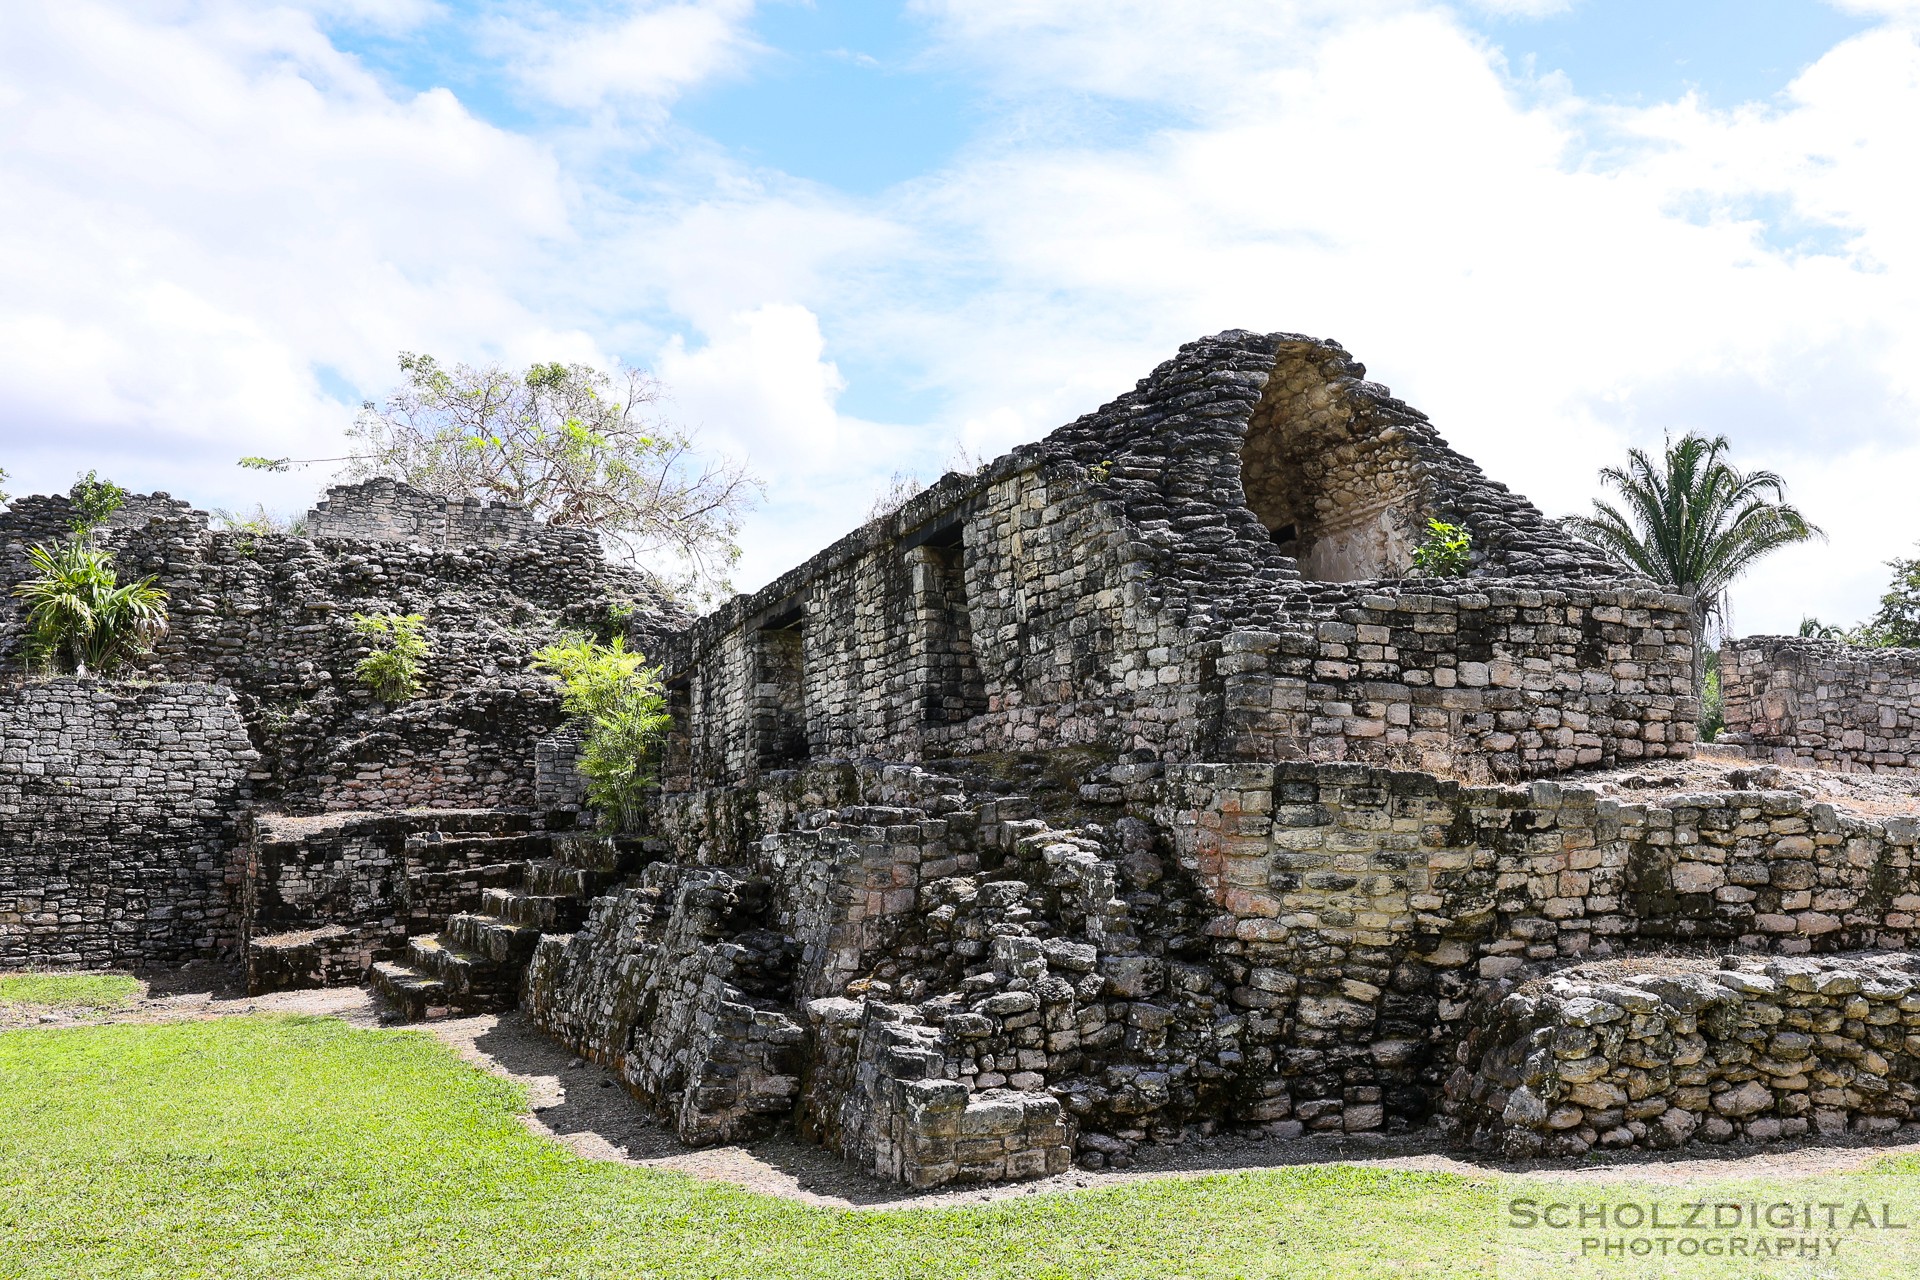 Kohunlich Maya